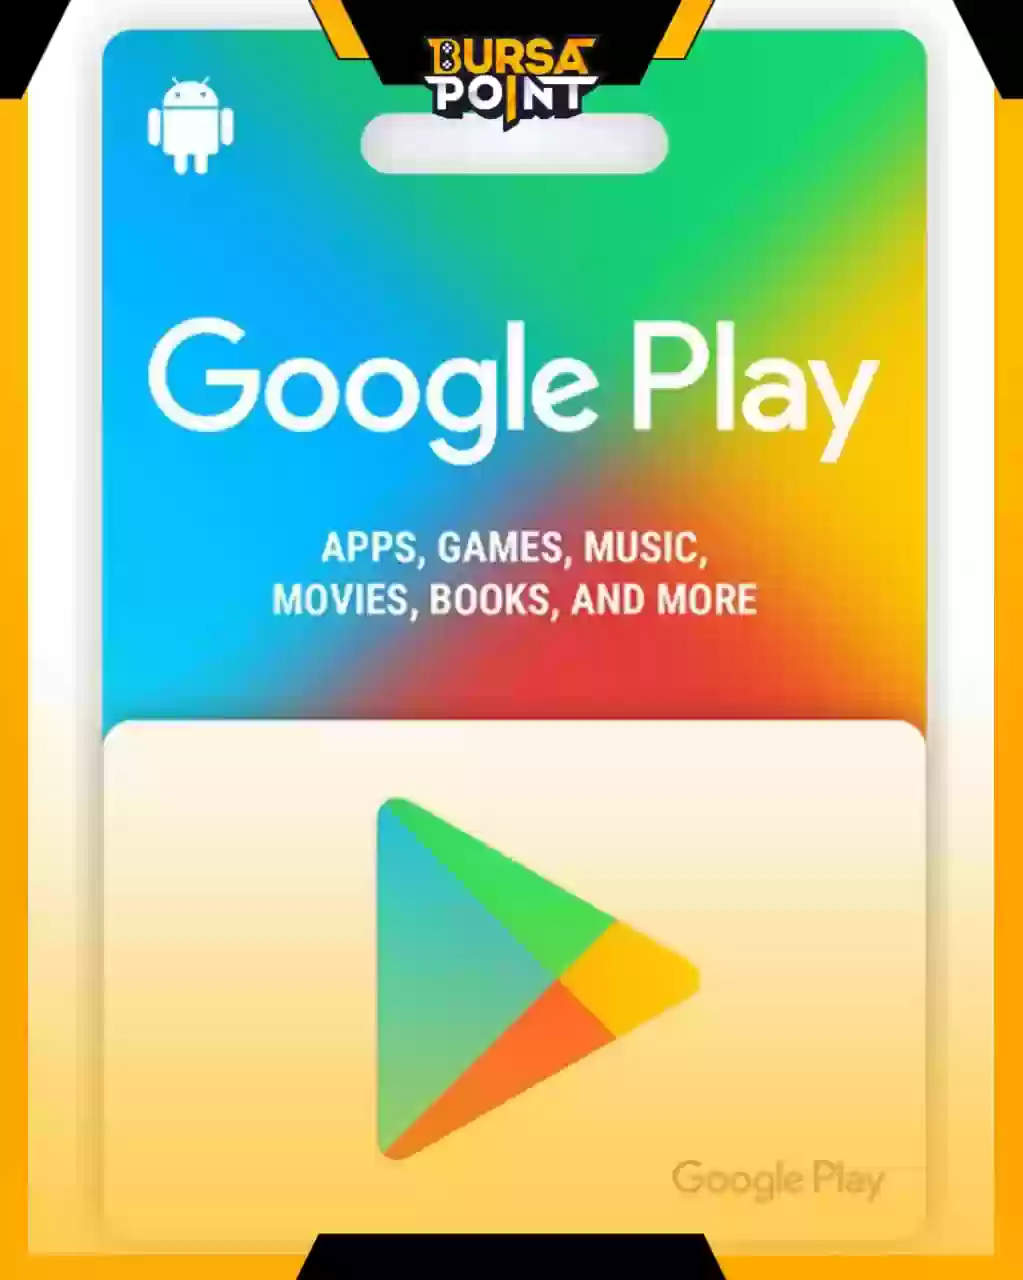 Google Play Indonesia Murah